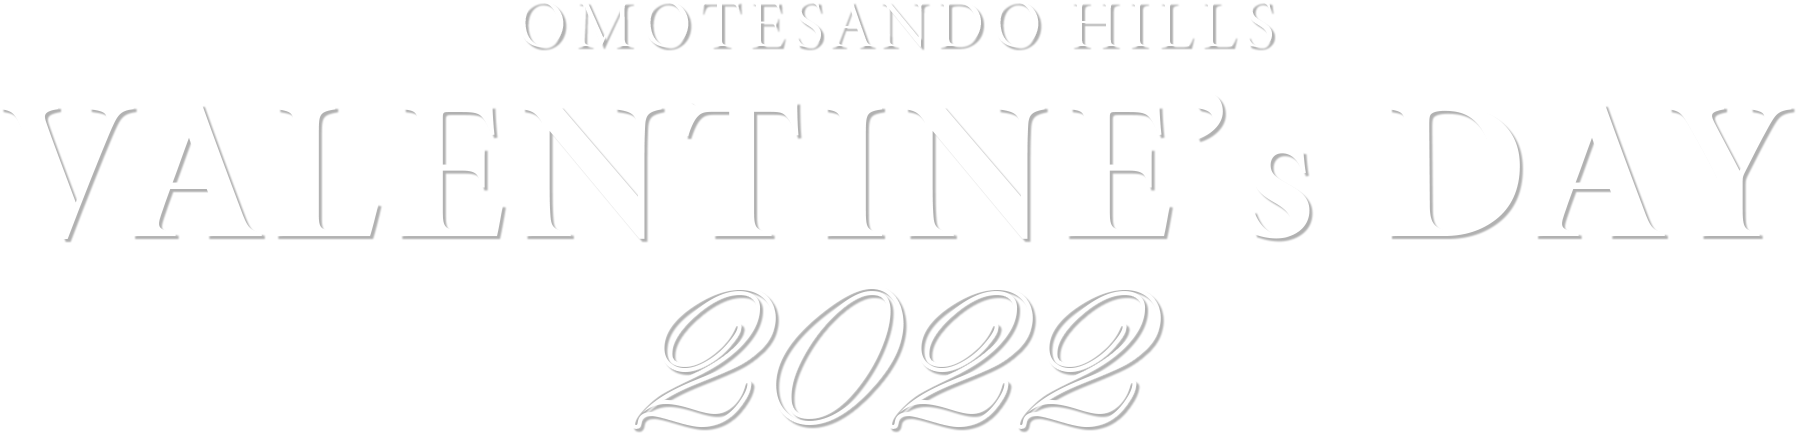 OMOTESANDO HILLS VAL EN TINE'S DAY 2022